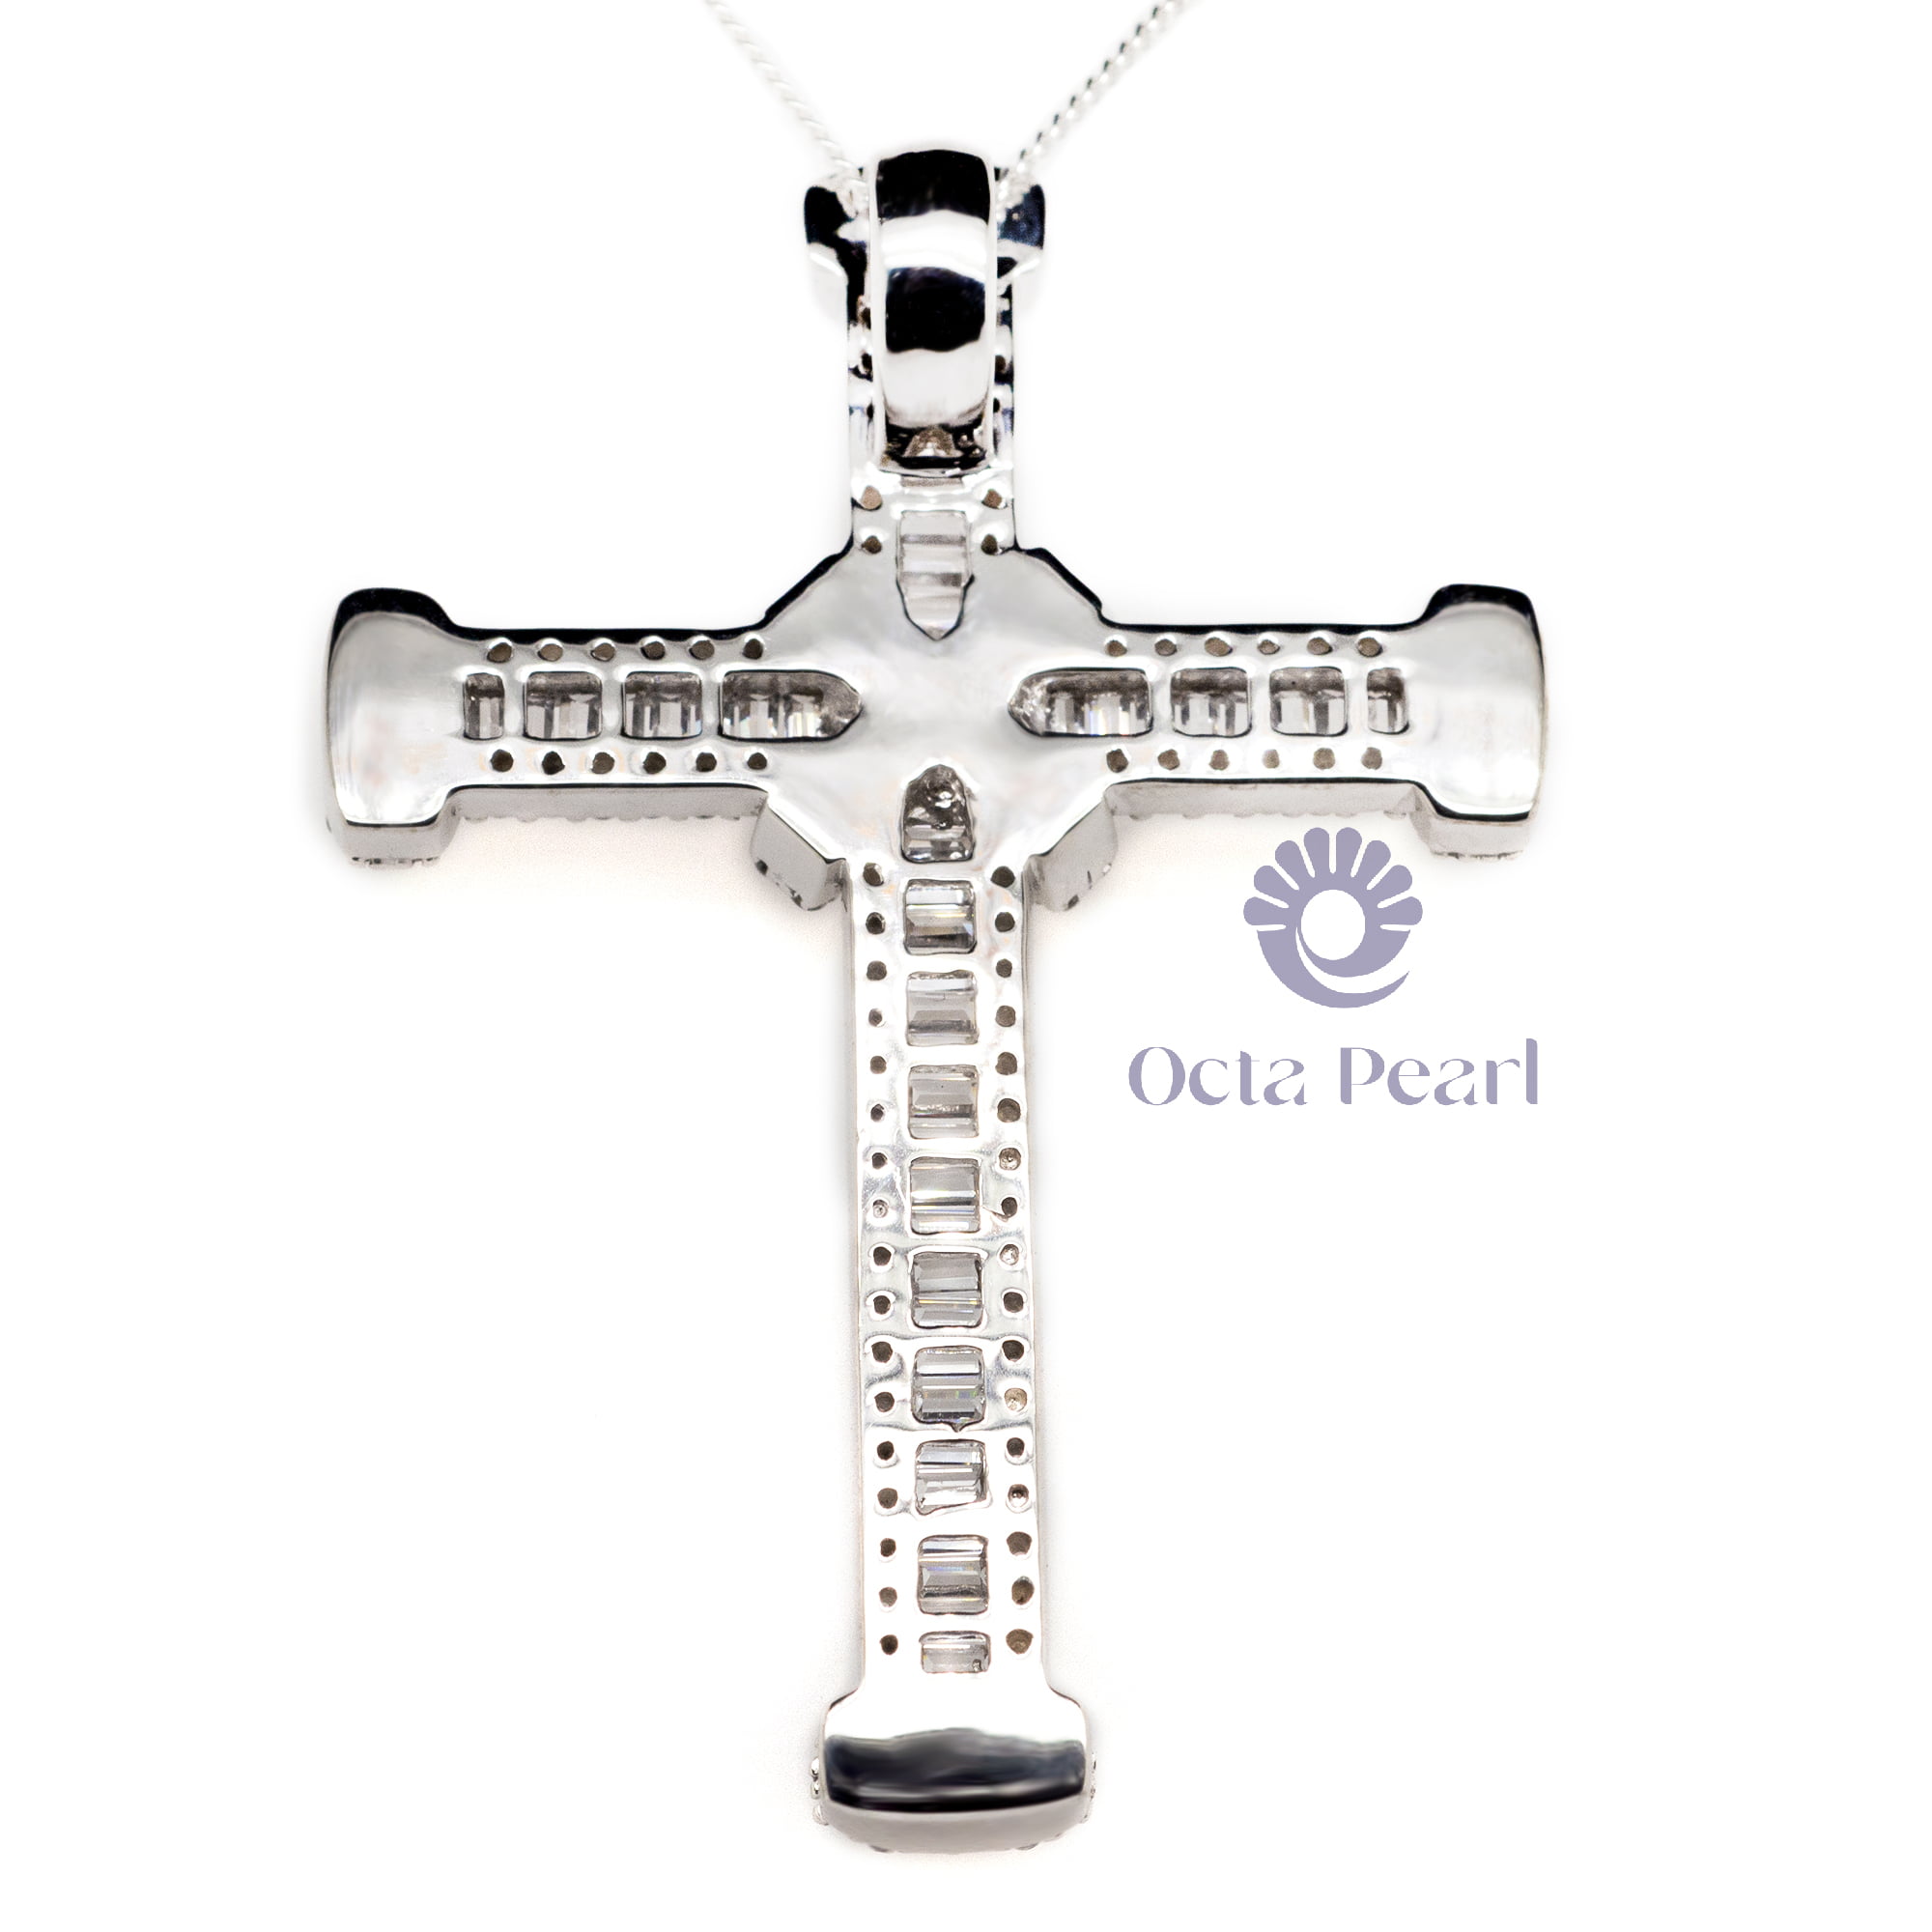 Round & Baguette Cut White CZ Stone Religious Holy Christian Cross Pendant For Men & Women